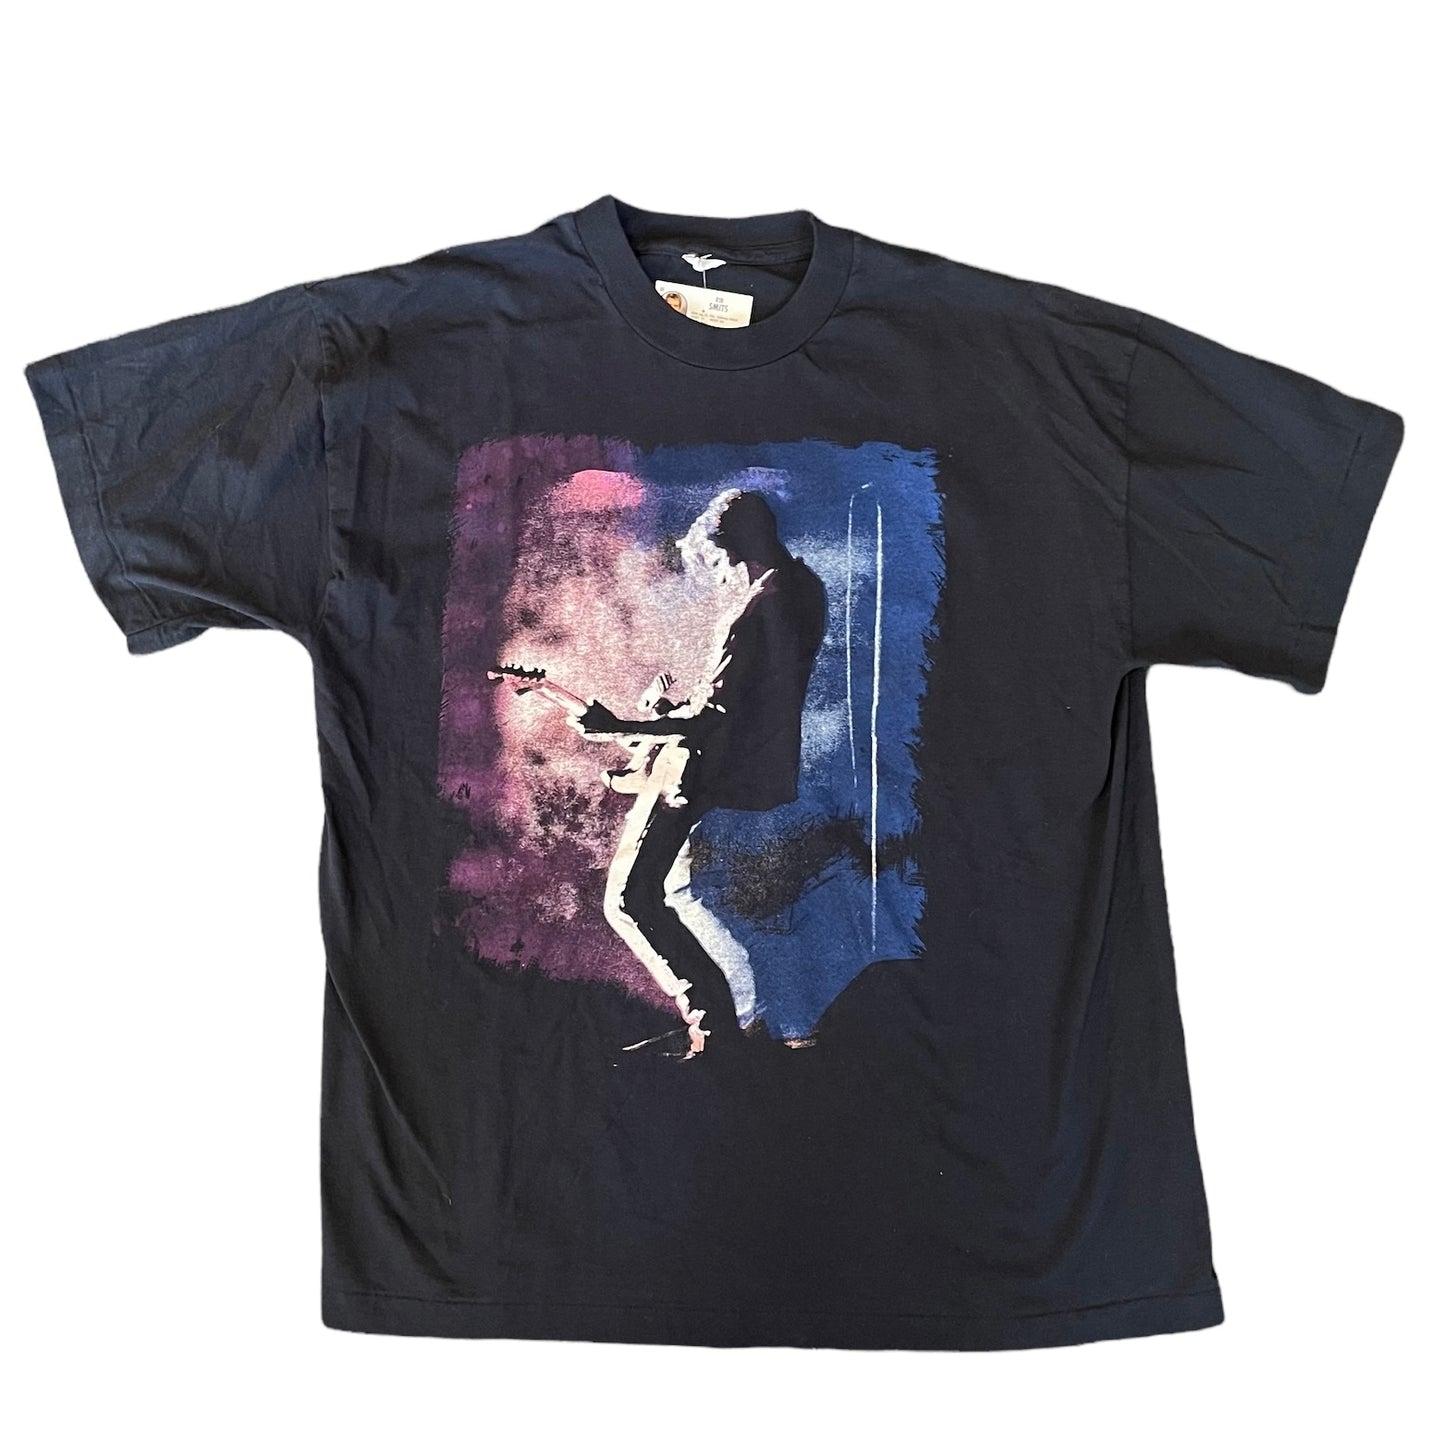 Vintage 1994 Bryan Adams Band Shirt